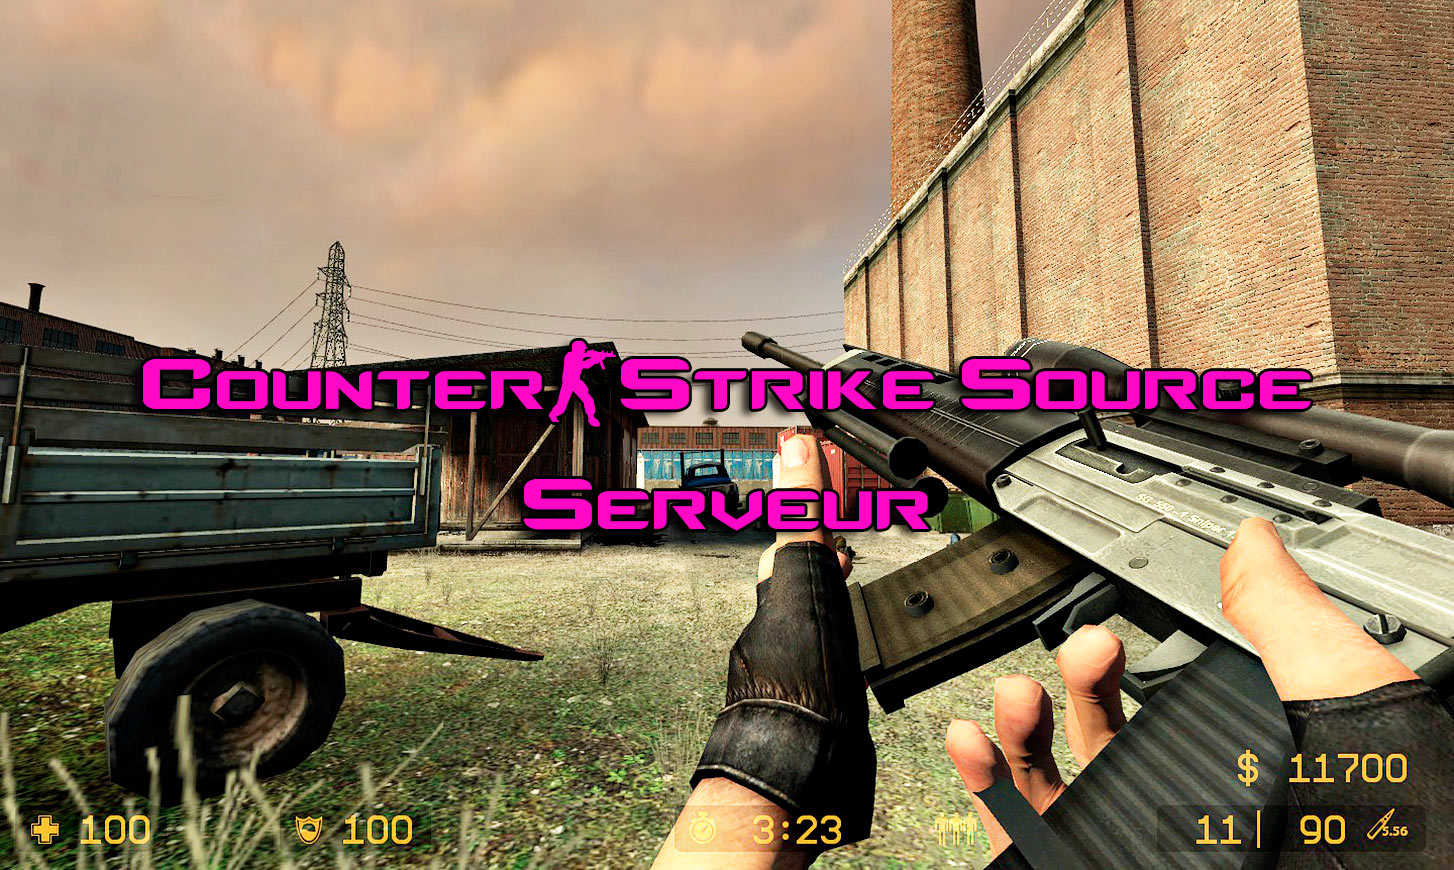 Serveur Counter-Strike: Source